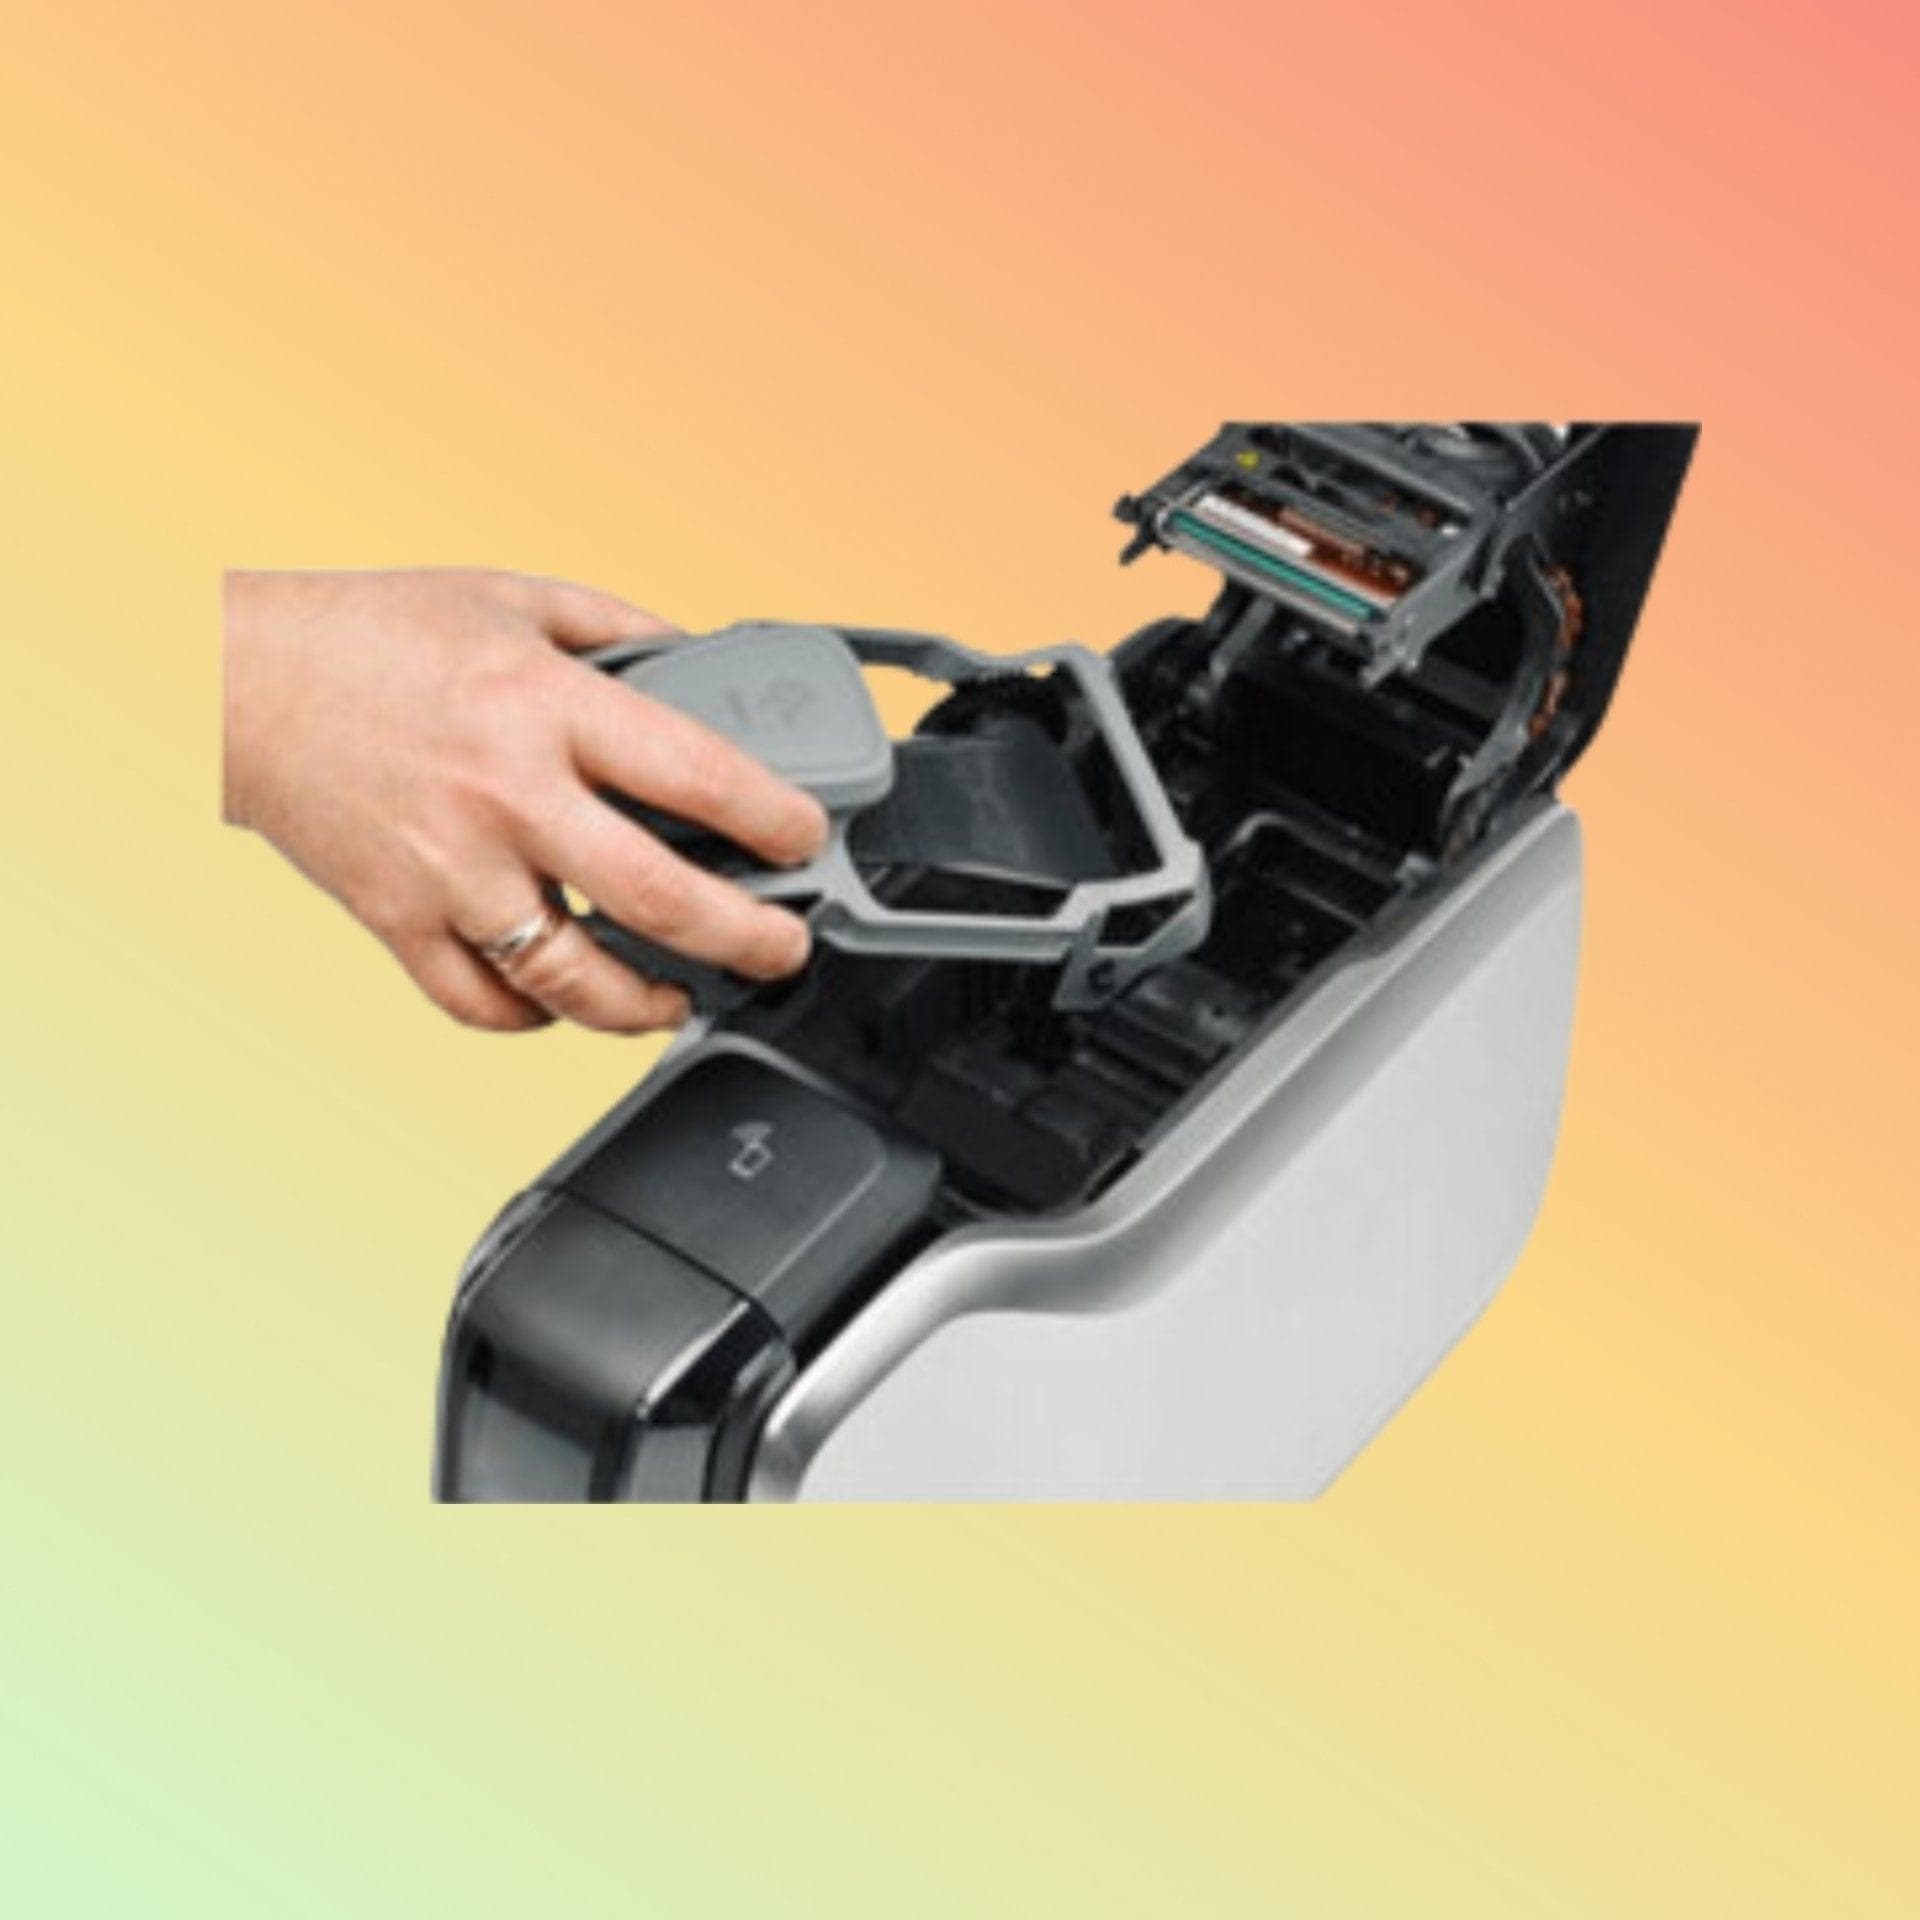 Idcard Printer - Zebra ZC100 - Neotech